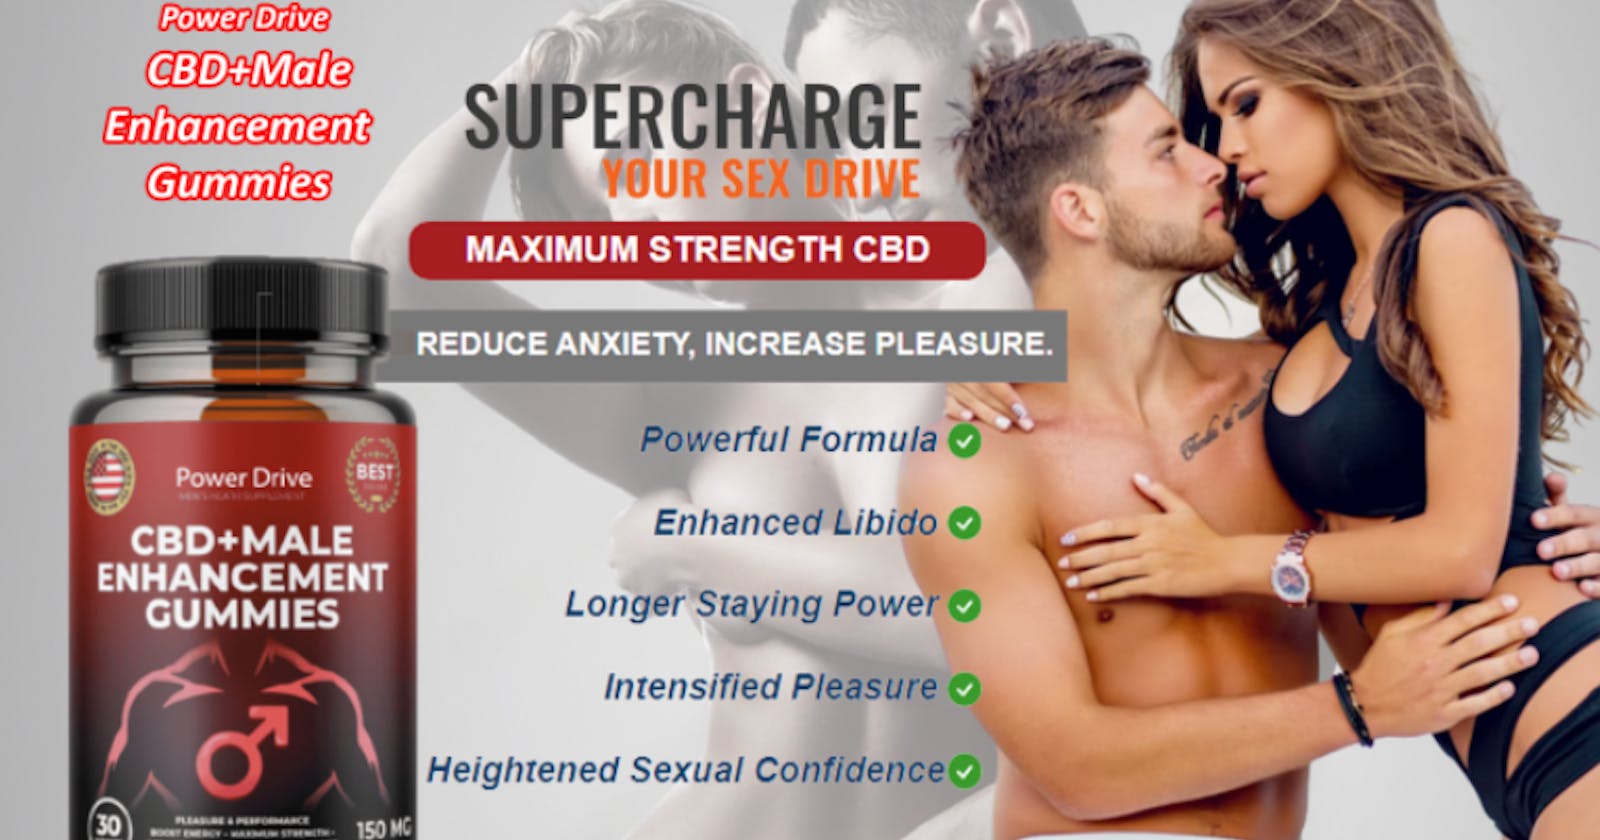 Power Drive CBD Male Enhancement Gummies Testosterone Booster Reviews - Is It Legit & Safe?